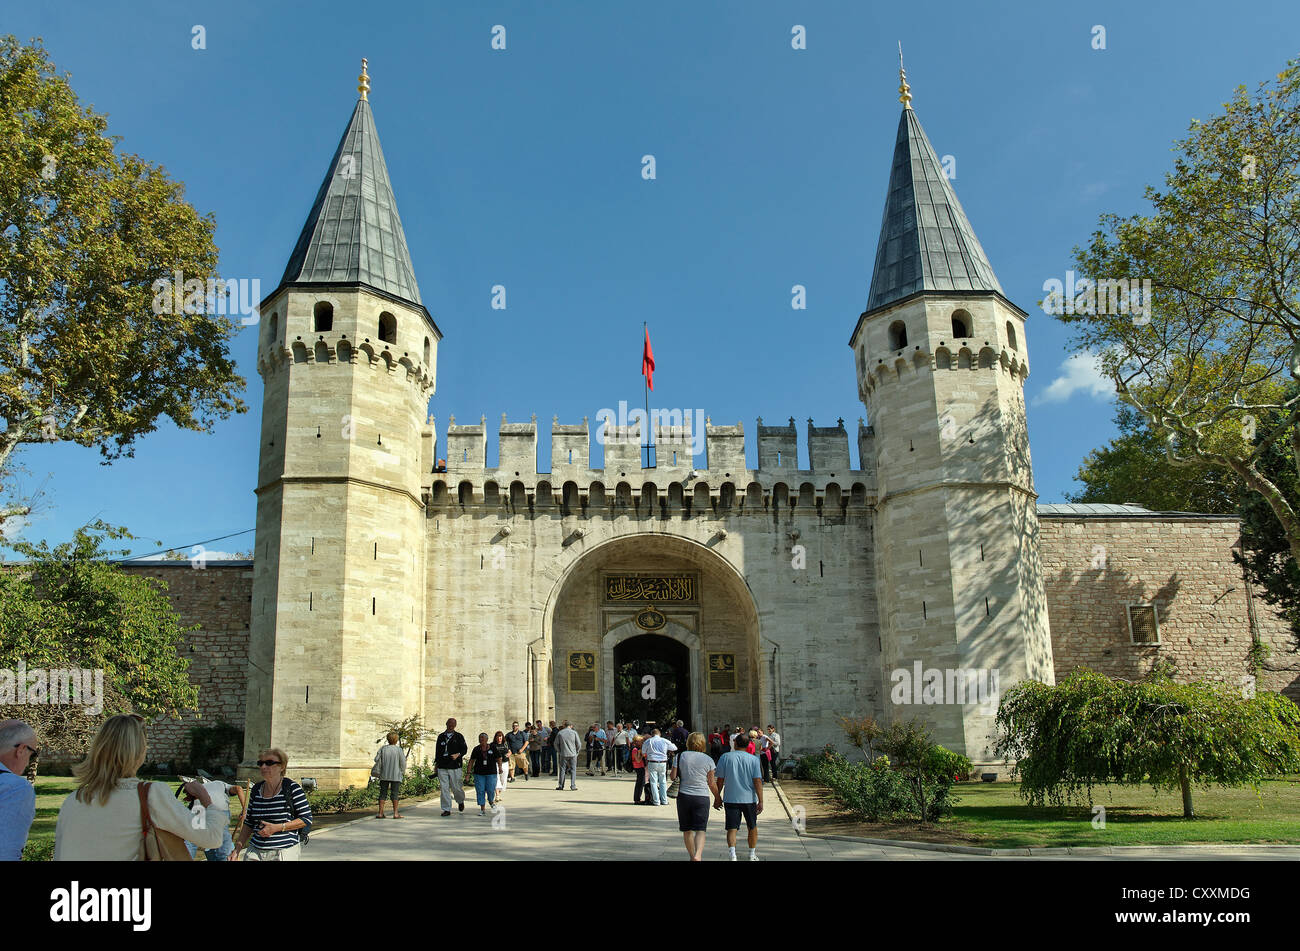 Entrance gate of the Topkapi Palace at Sultanahmet, Istanbul, Turkey. Stock Photo